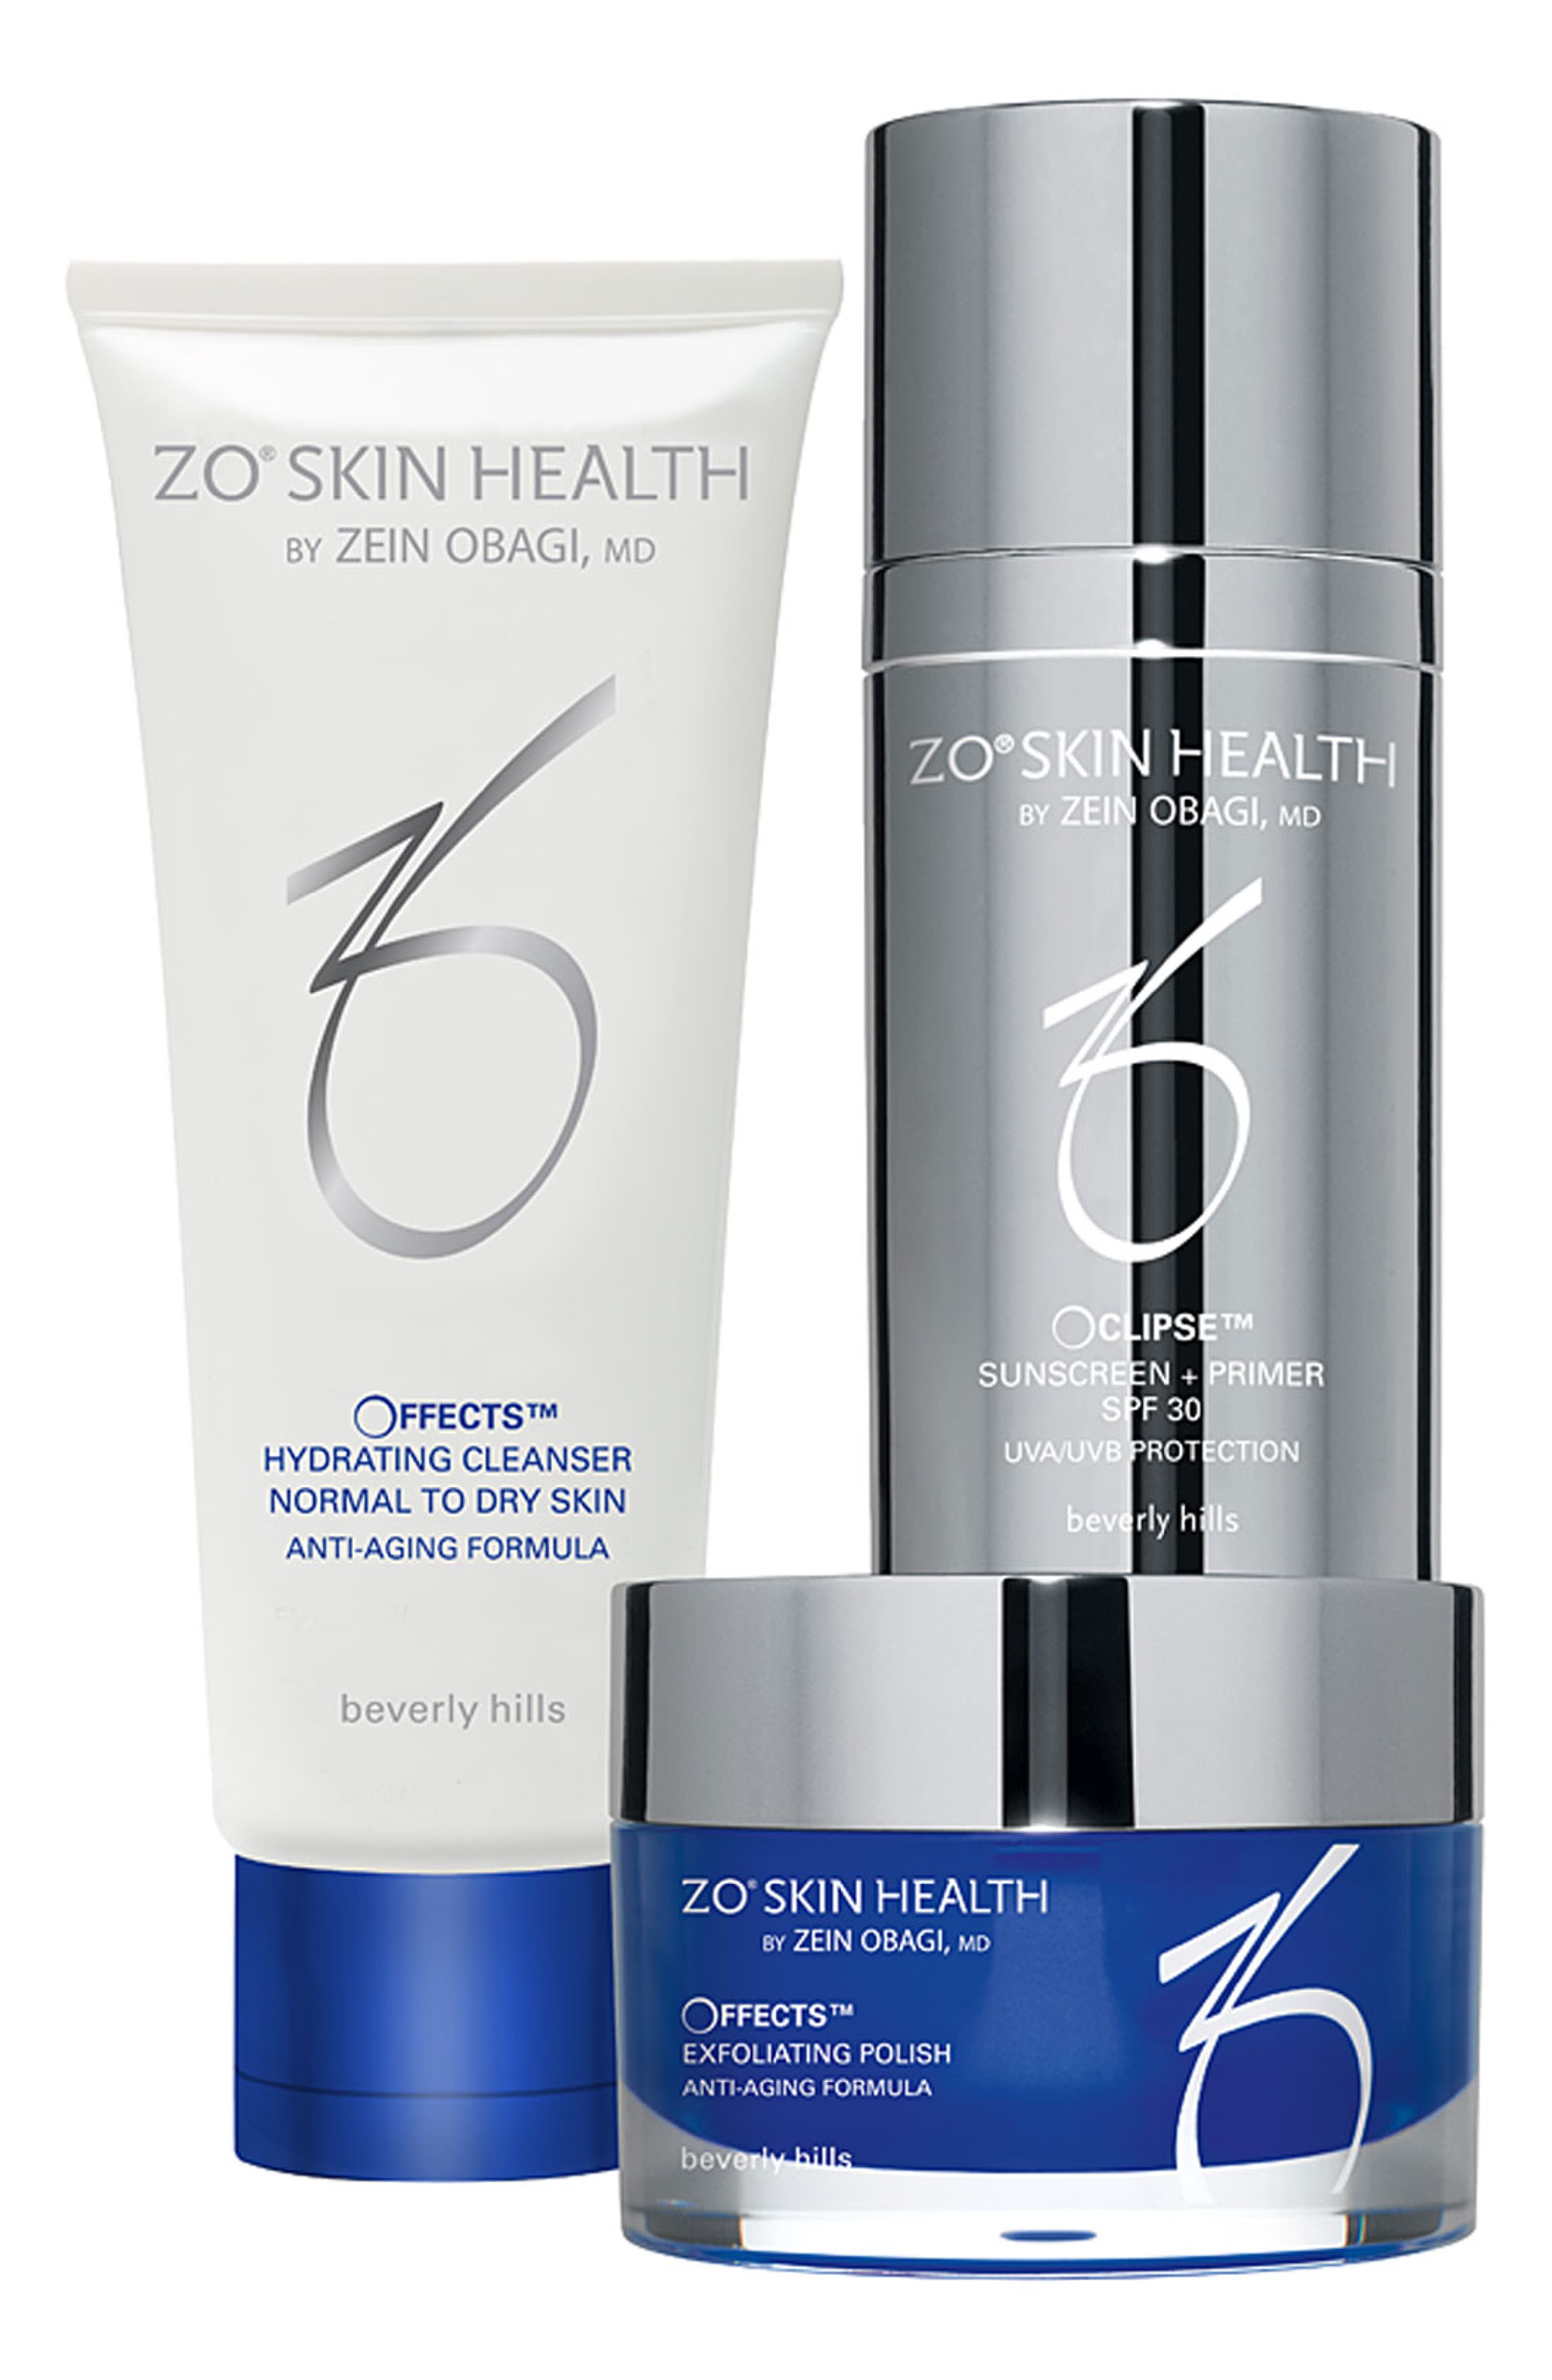 zo skin health travel kit